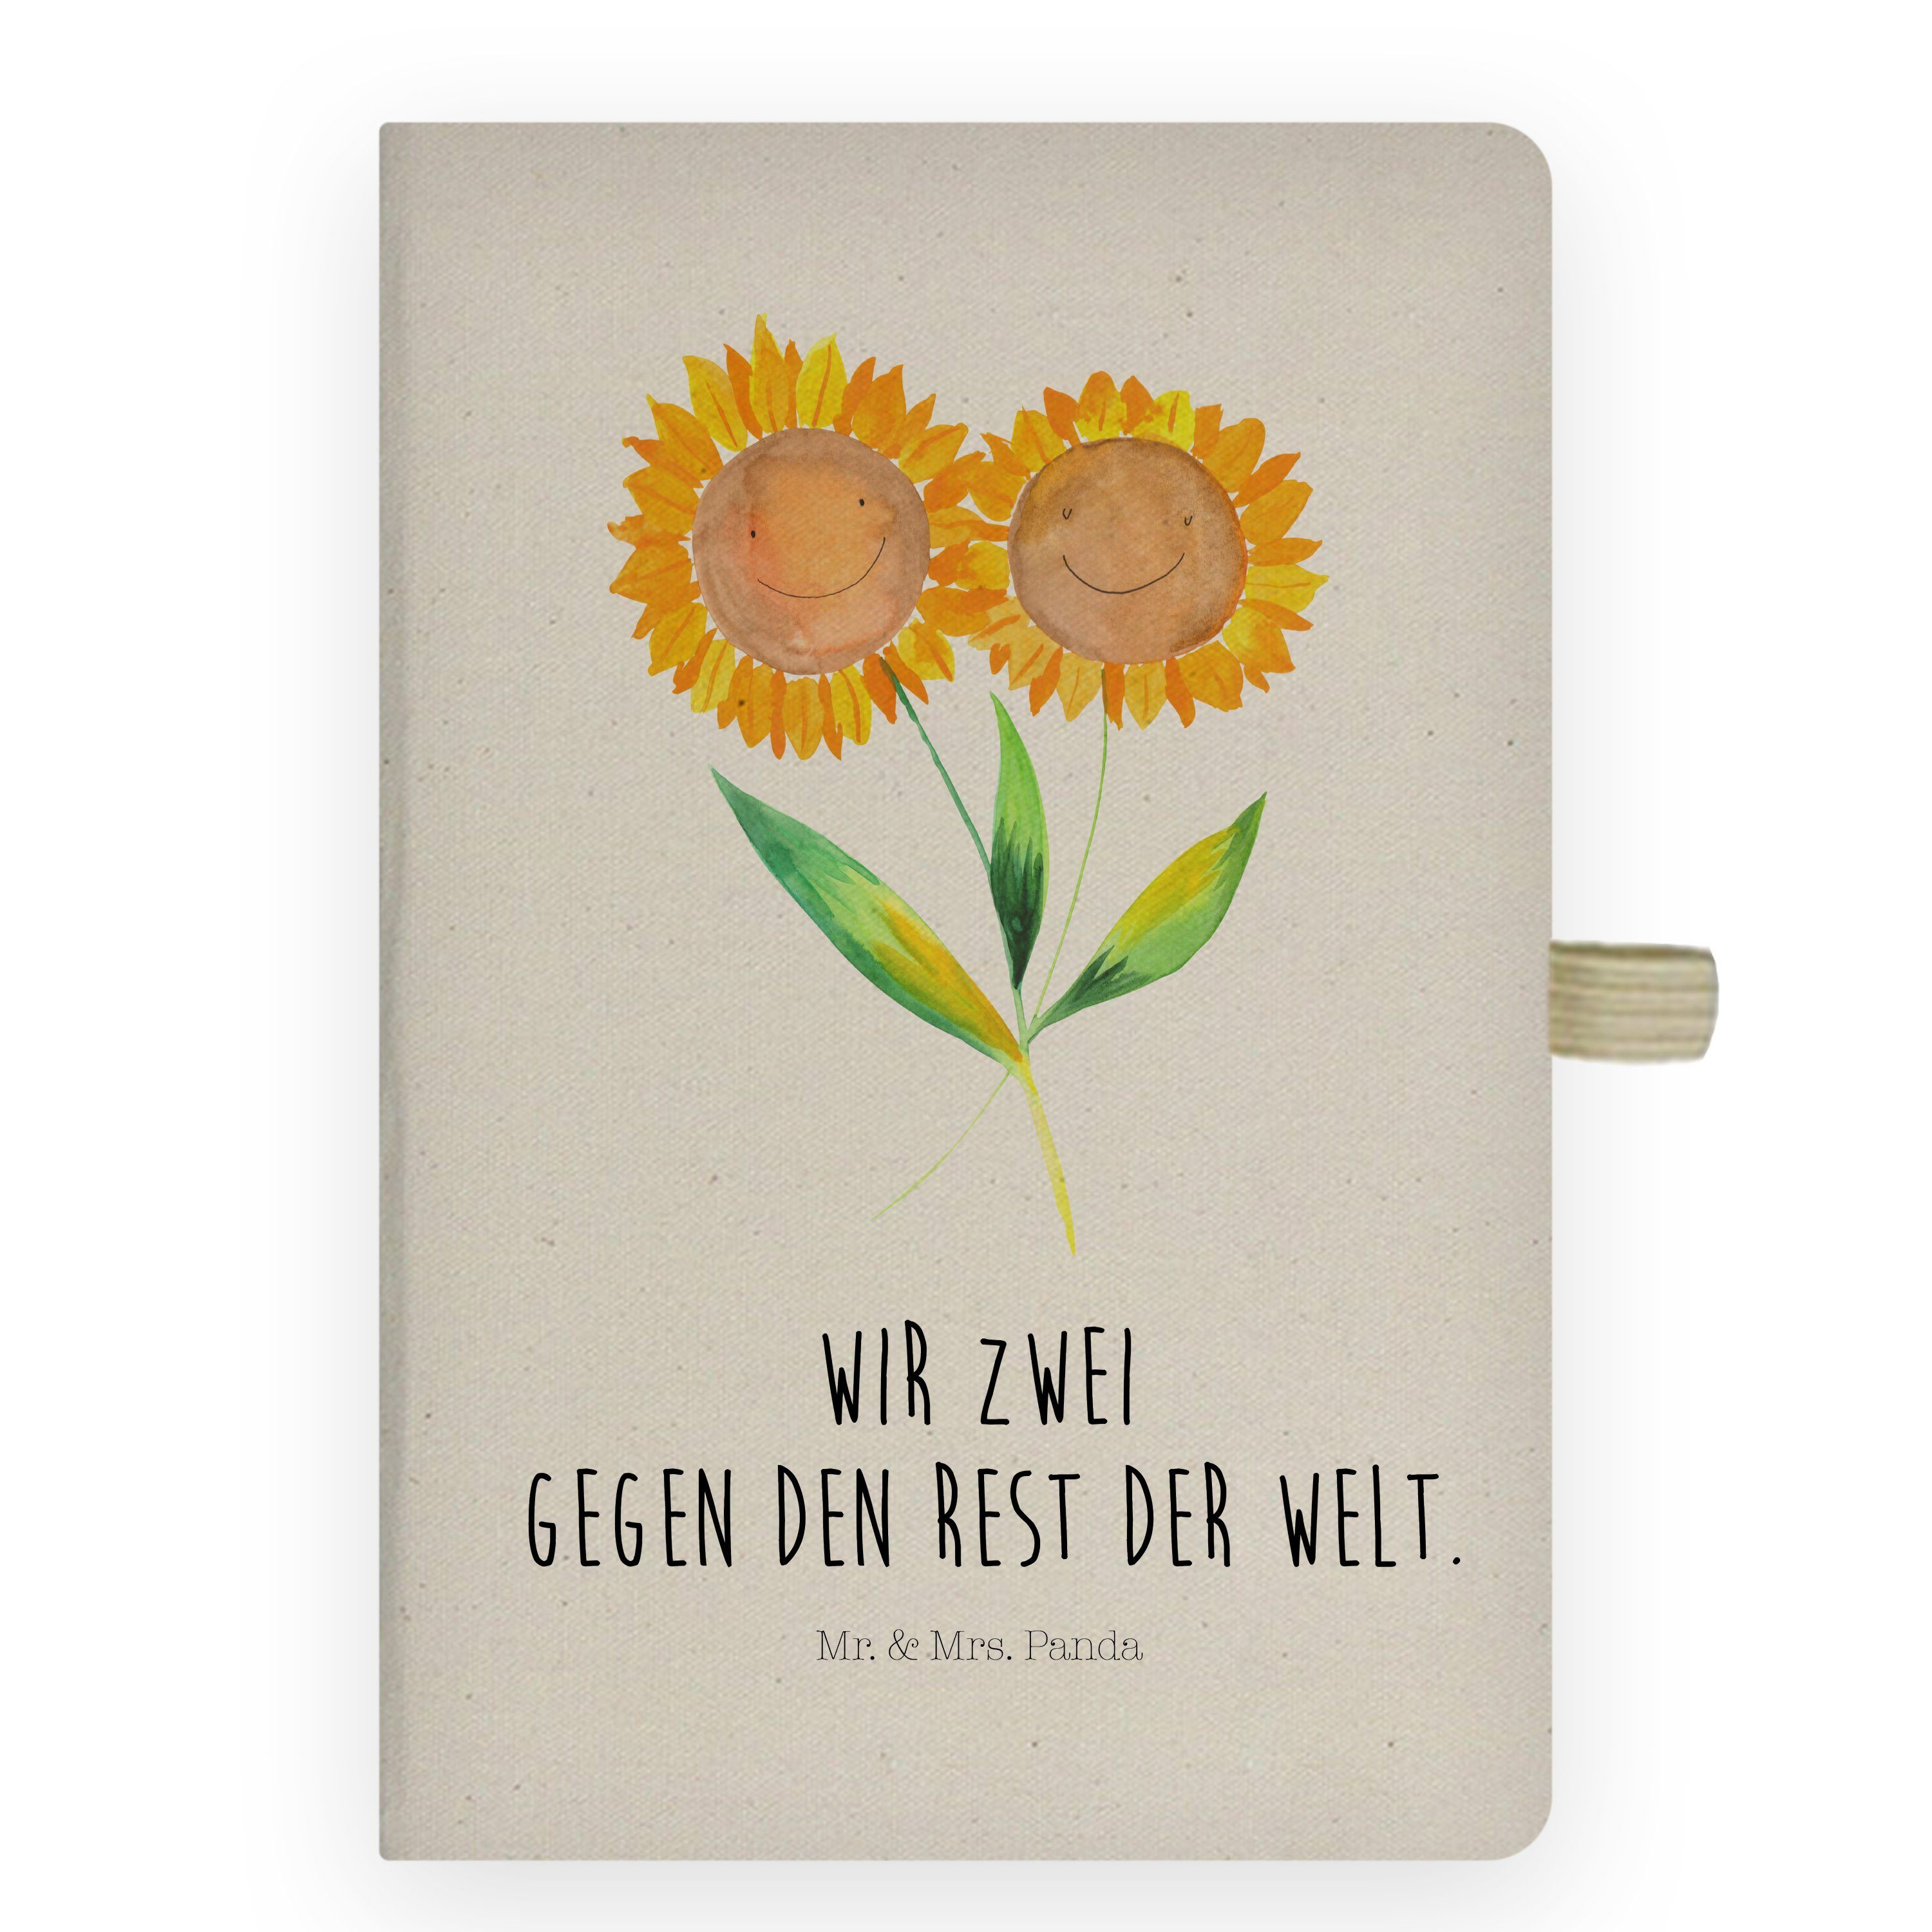 Mr. & Mrs. Panda Notizbuch Blume Sonnenblume - Transparent - Geschenk, Blumen, Pflanzen, Notizen Mr. & Mrs. Panda, Hardcover